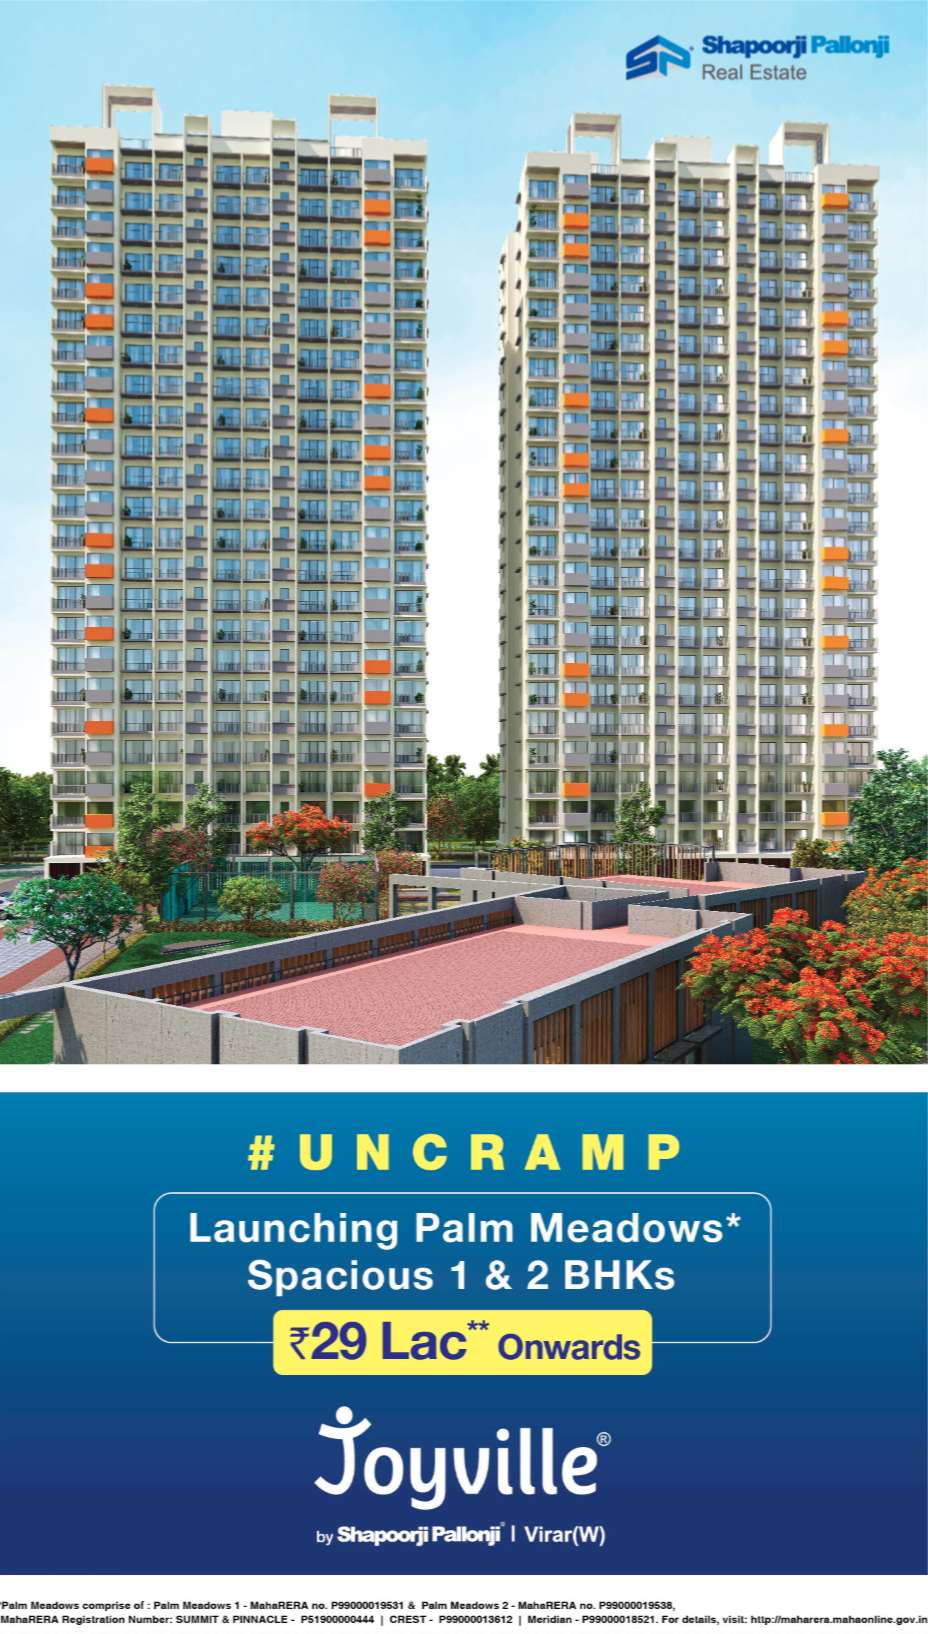 Launching Palm Meadows at Shapoorji Pallonji Joyville in Virar, Mumbai